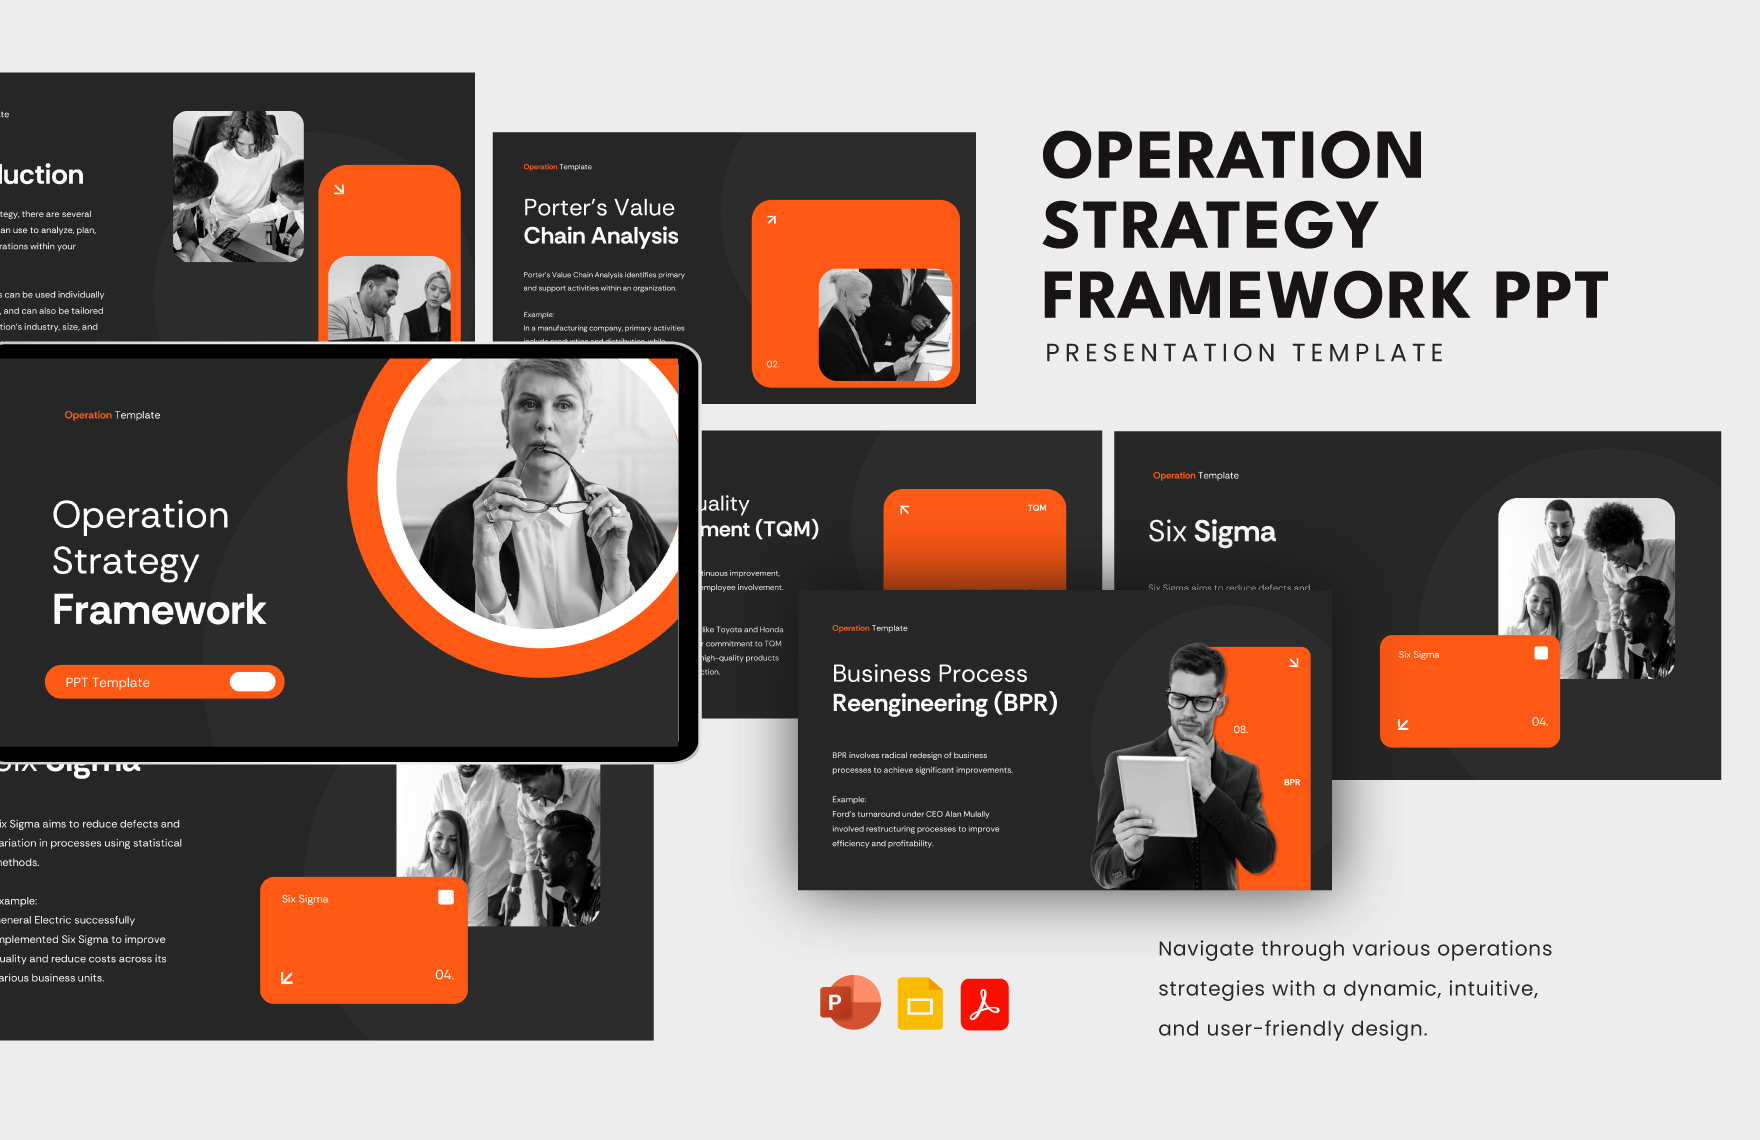 Operation Strategy Framework PPT Template